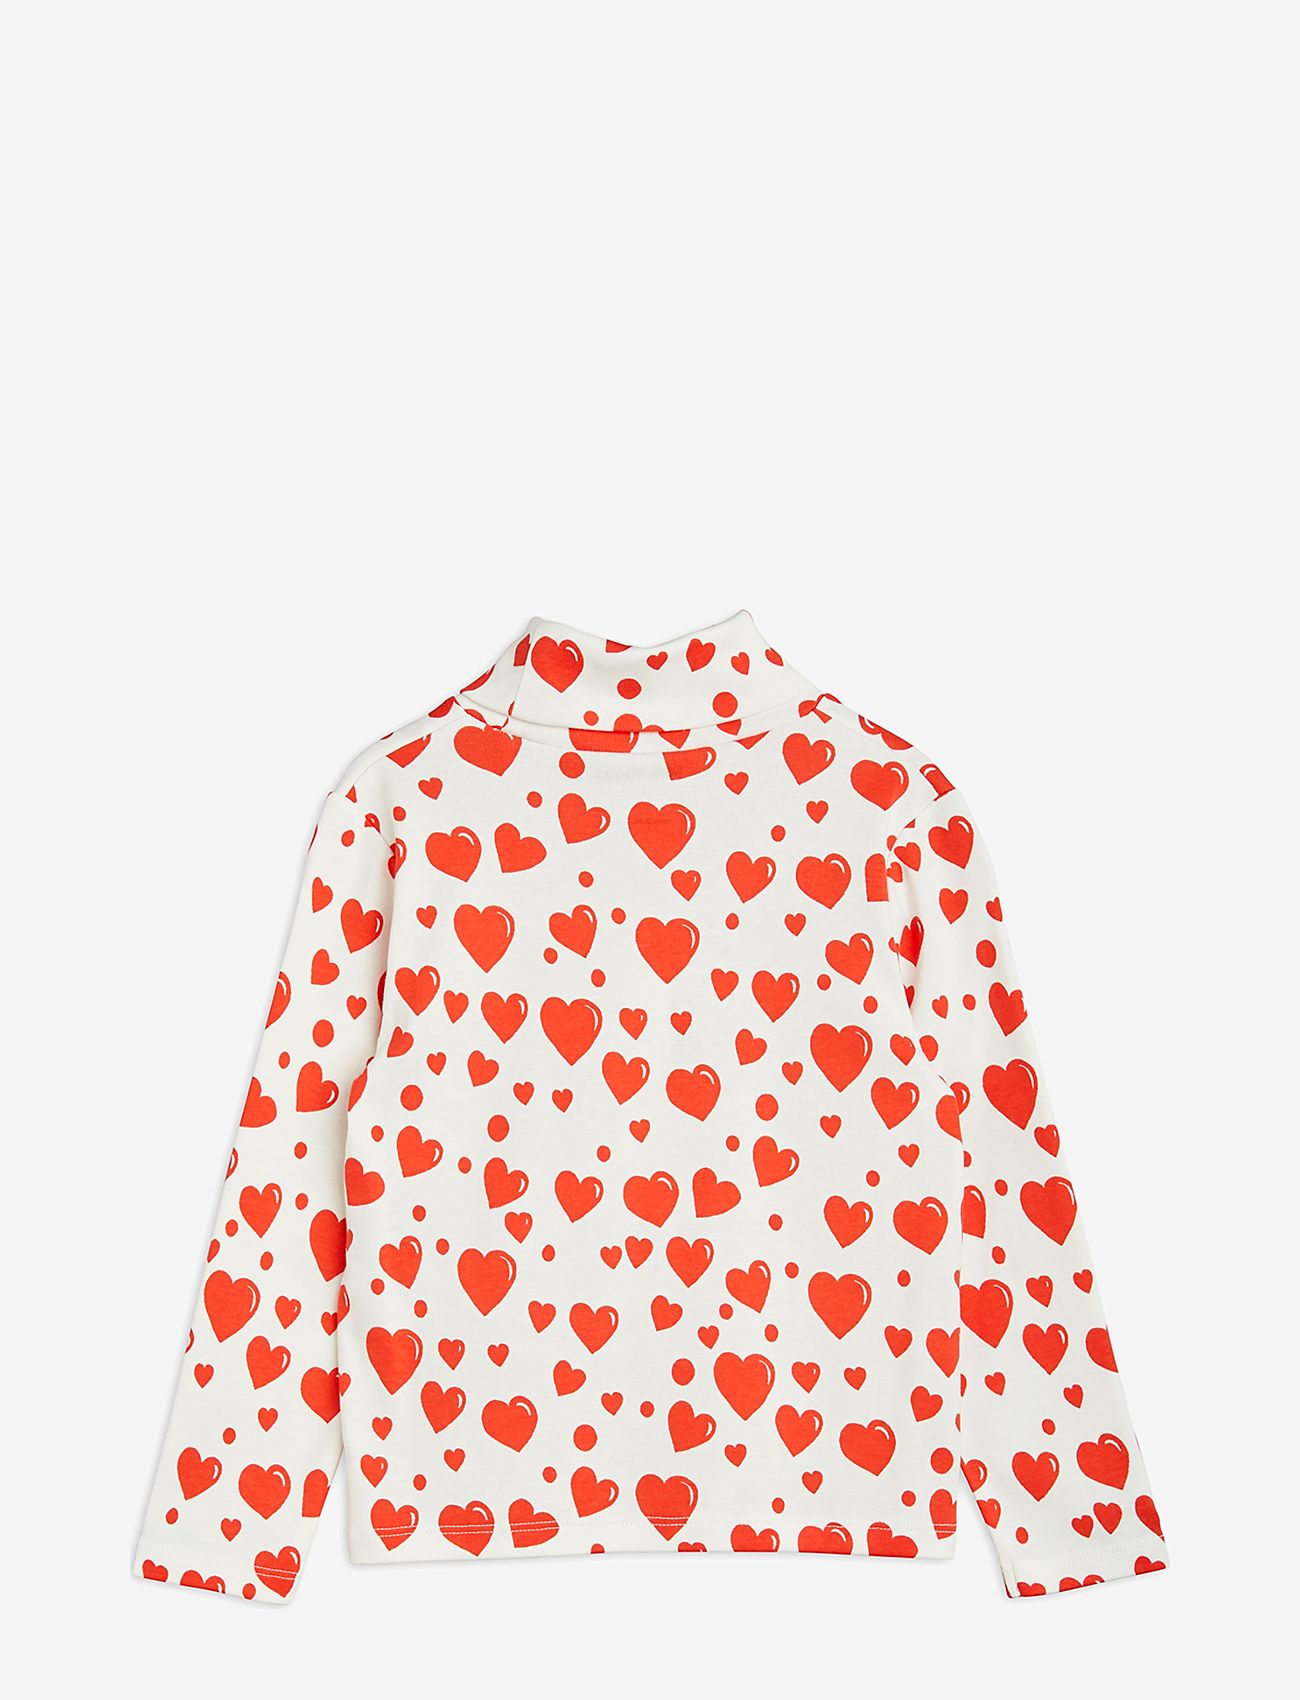 Mini Rodini - Hearts aop ls tee - megztiniai su aukšta apykakle - multi - 1